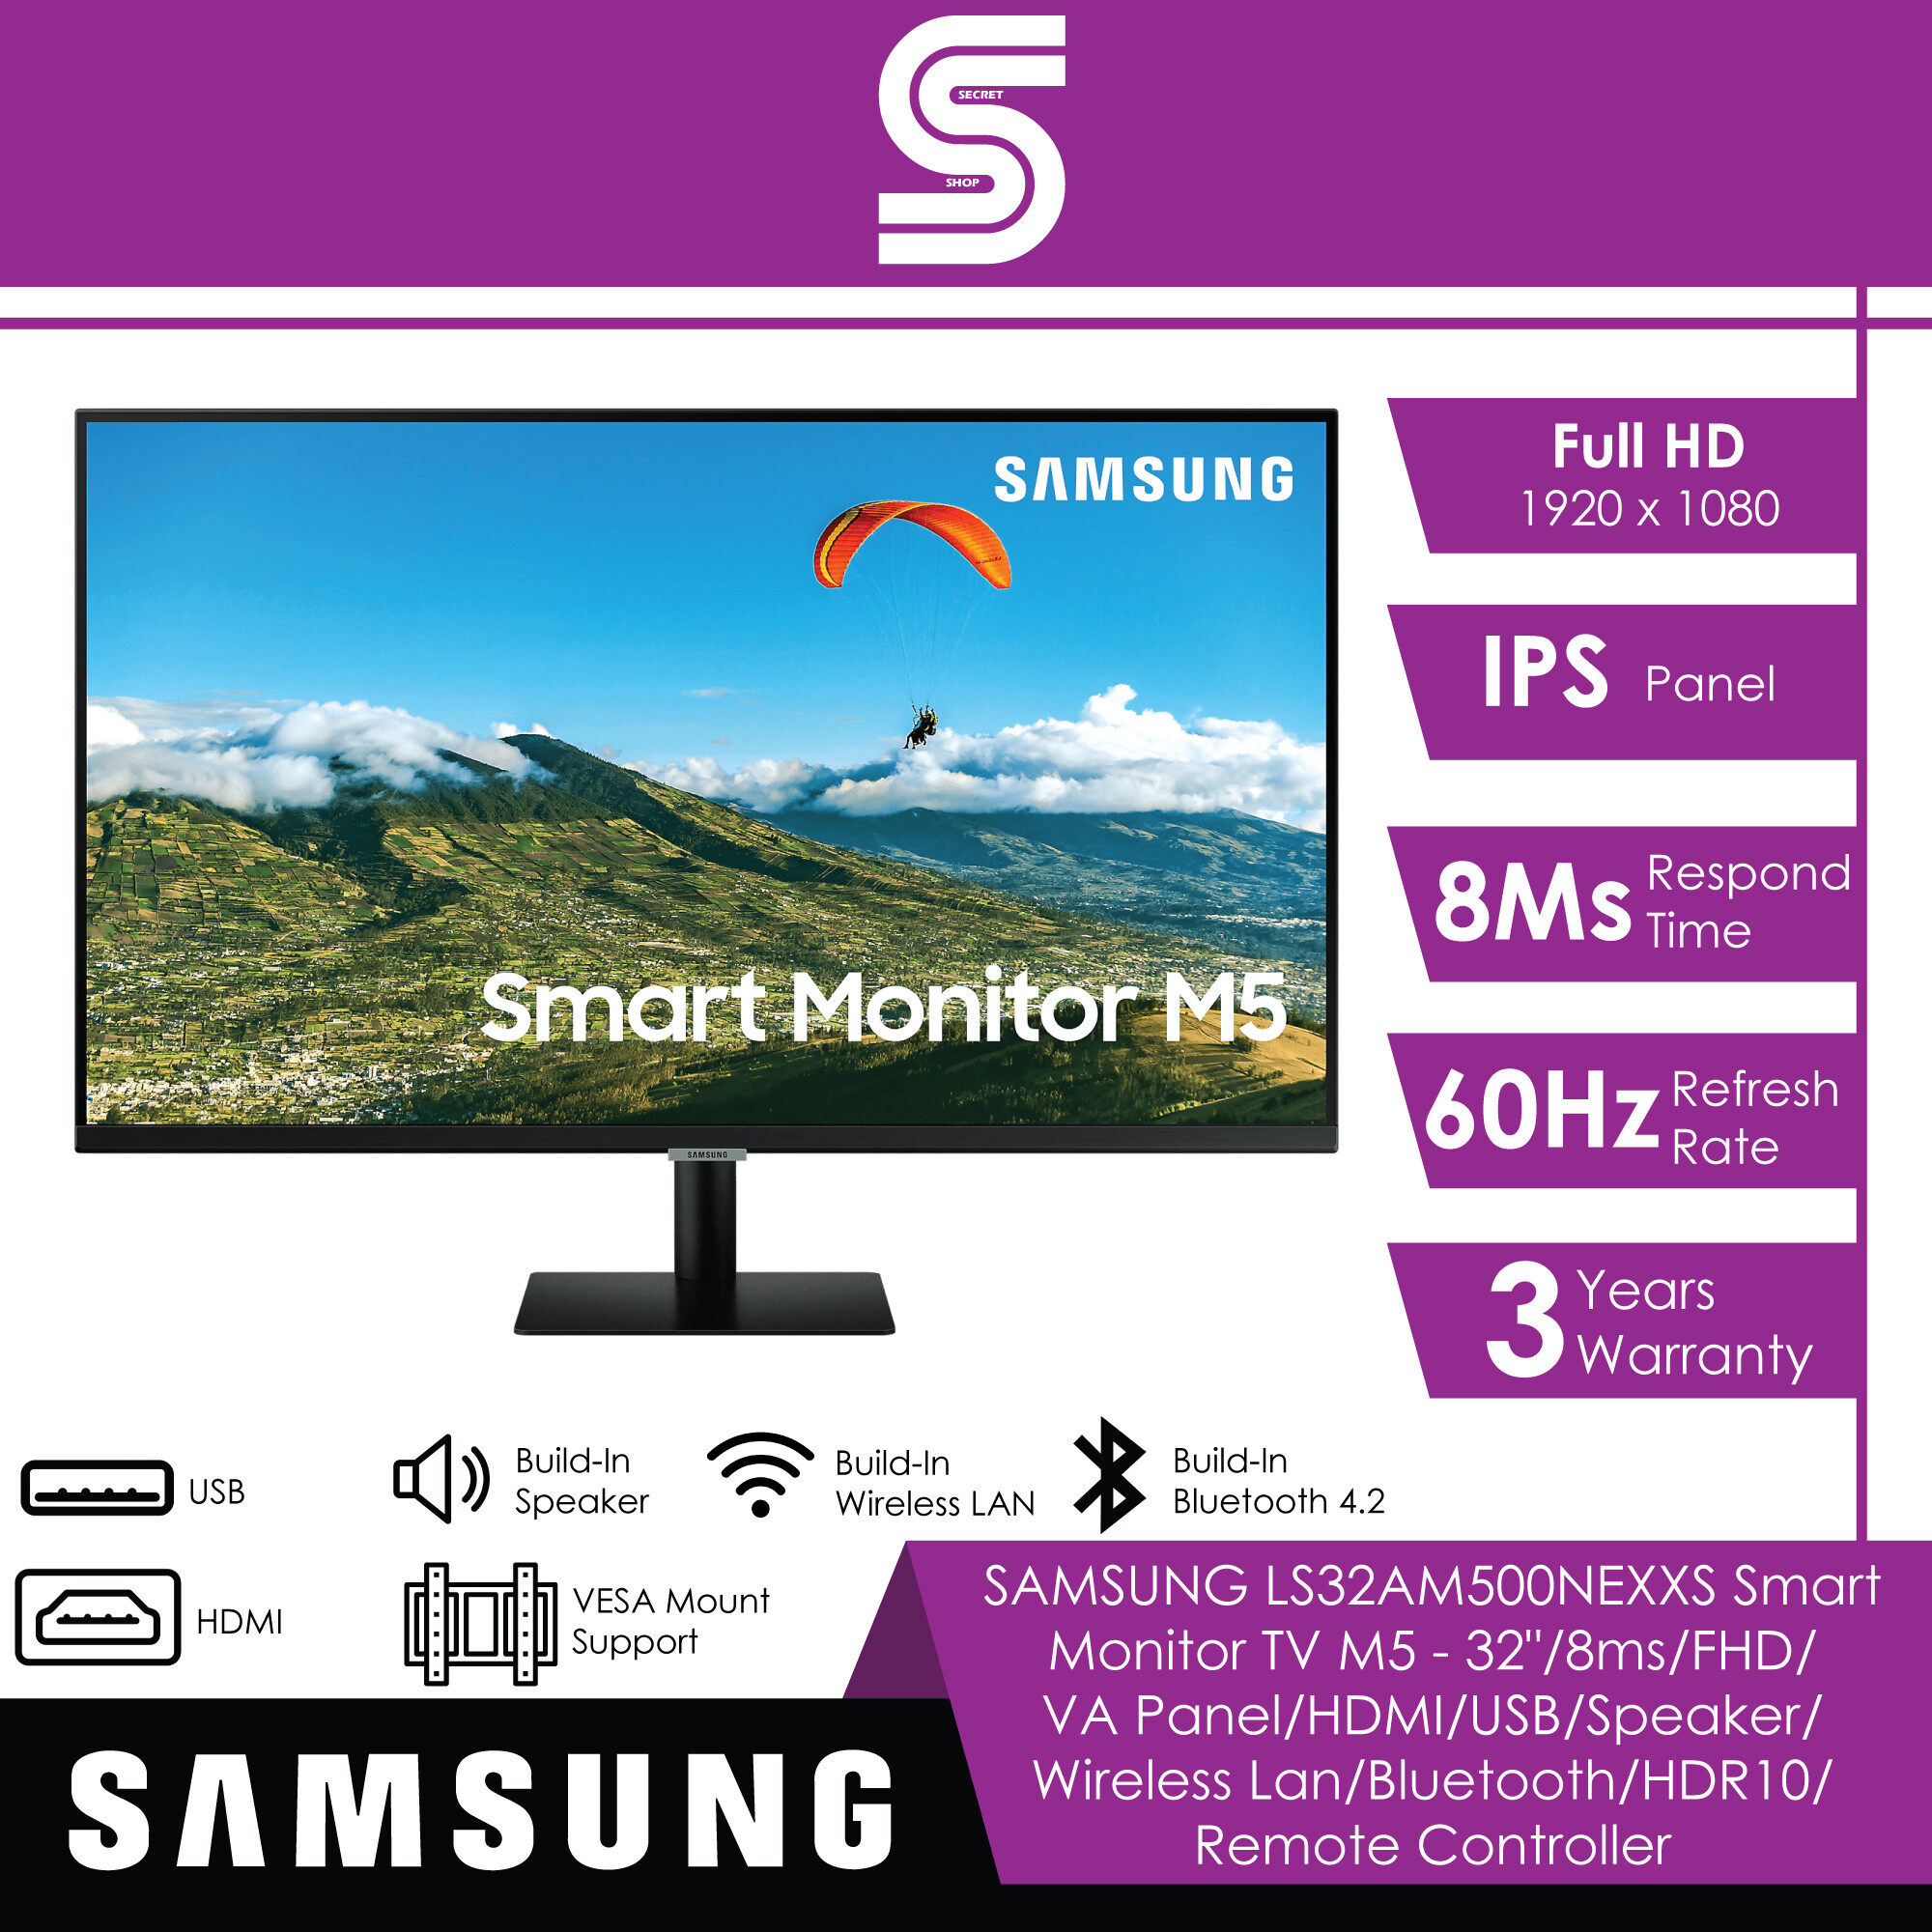 SAMSUNG LS32AM500NEXXS Smart Monitor TV M5 - 32"/8ms/FHD/VA Panel/HDMI/USB/Speaker/Wireless Lan/Bluetooth/HDR10/Remote Controller